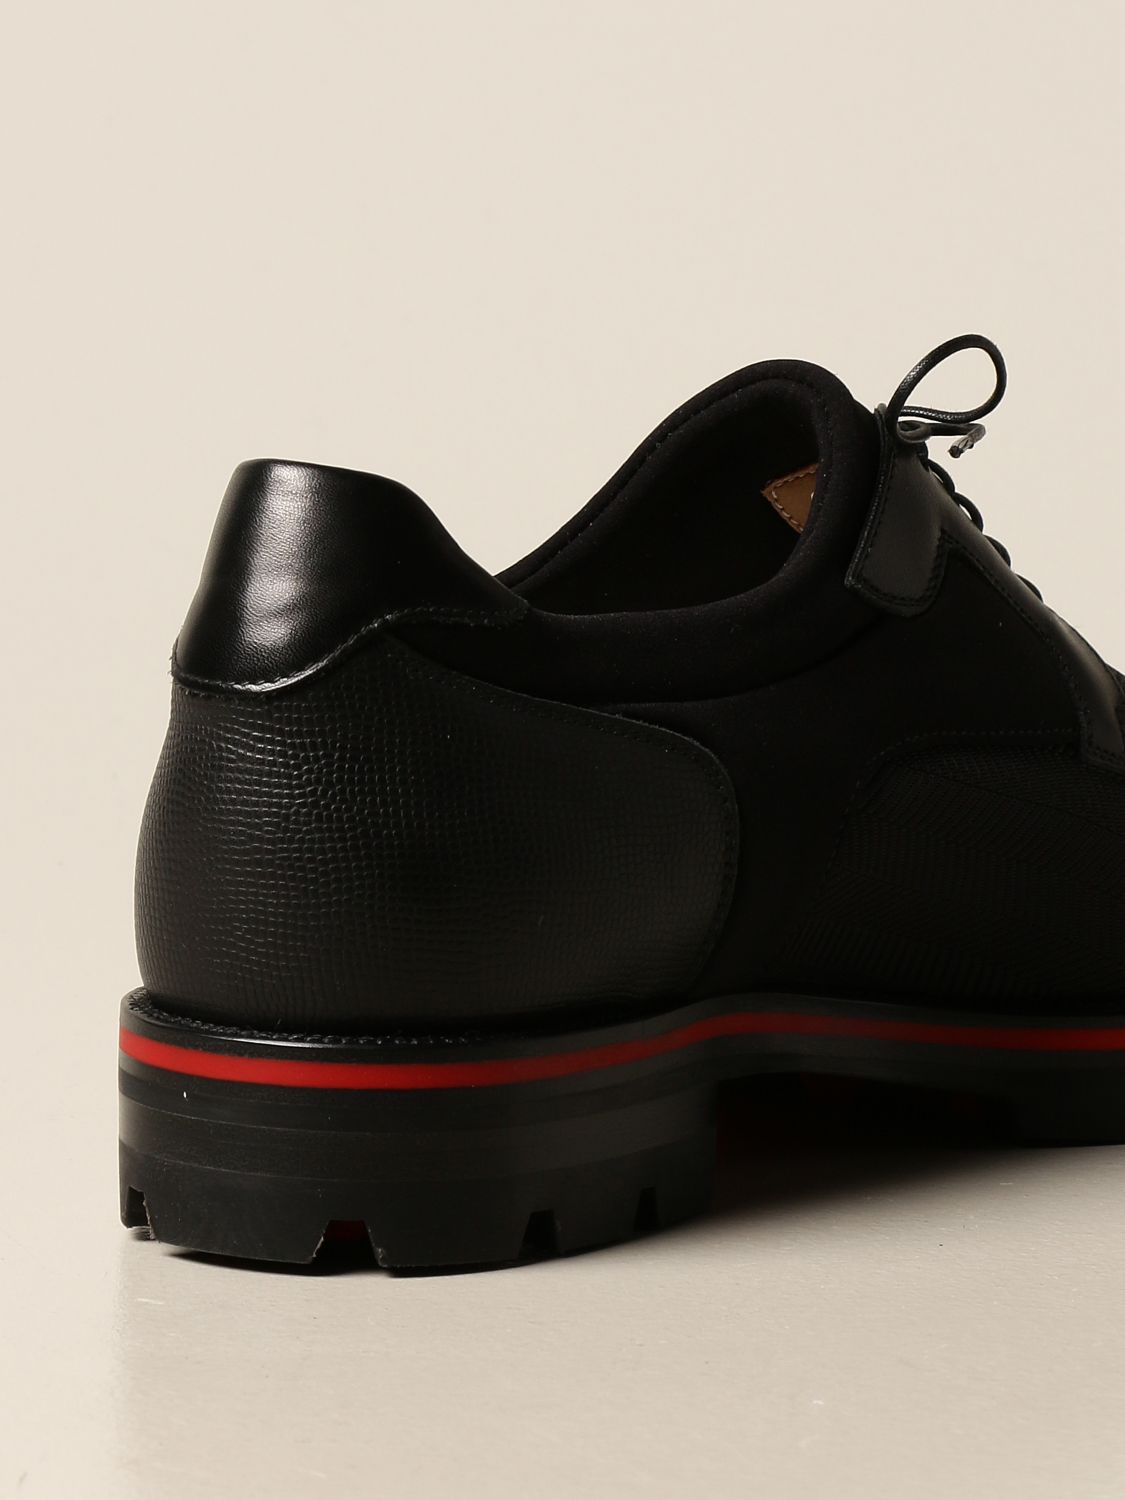 Christian Louboutin brogue shoes men - Black | Christian Louboutin brogue shoes 3201112 at GIGLIO.COM